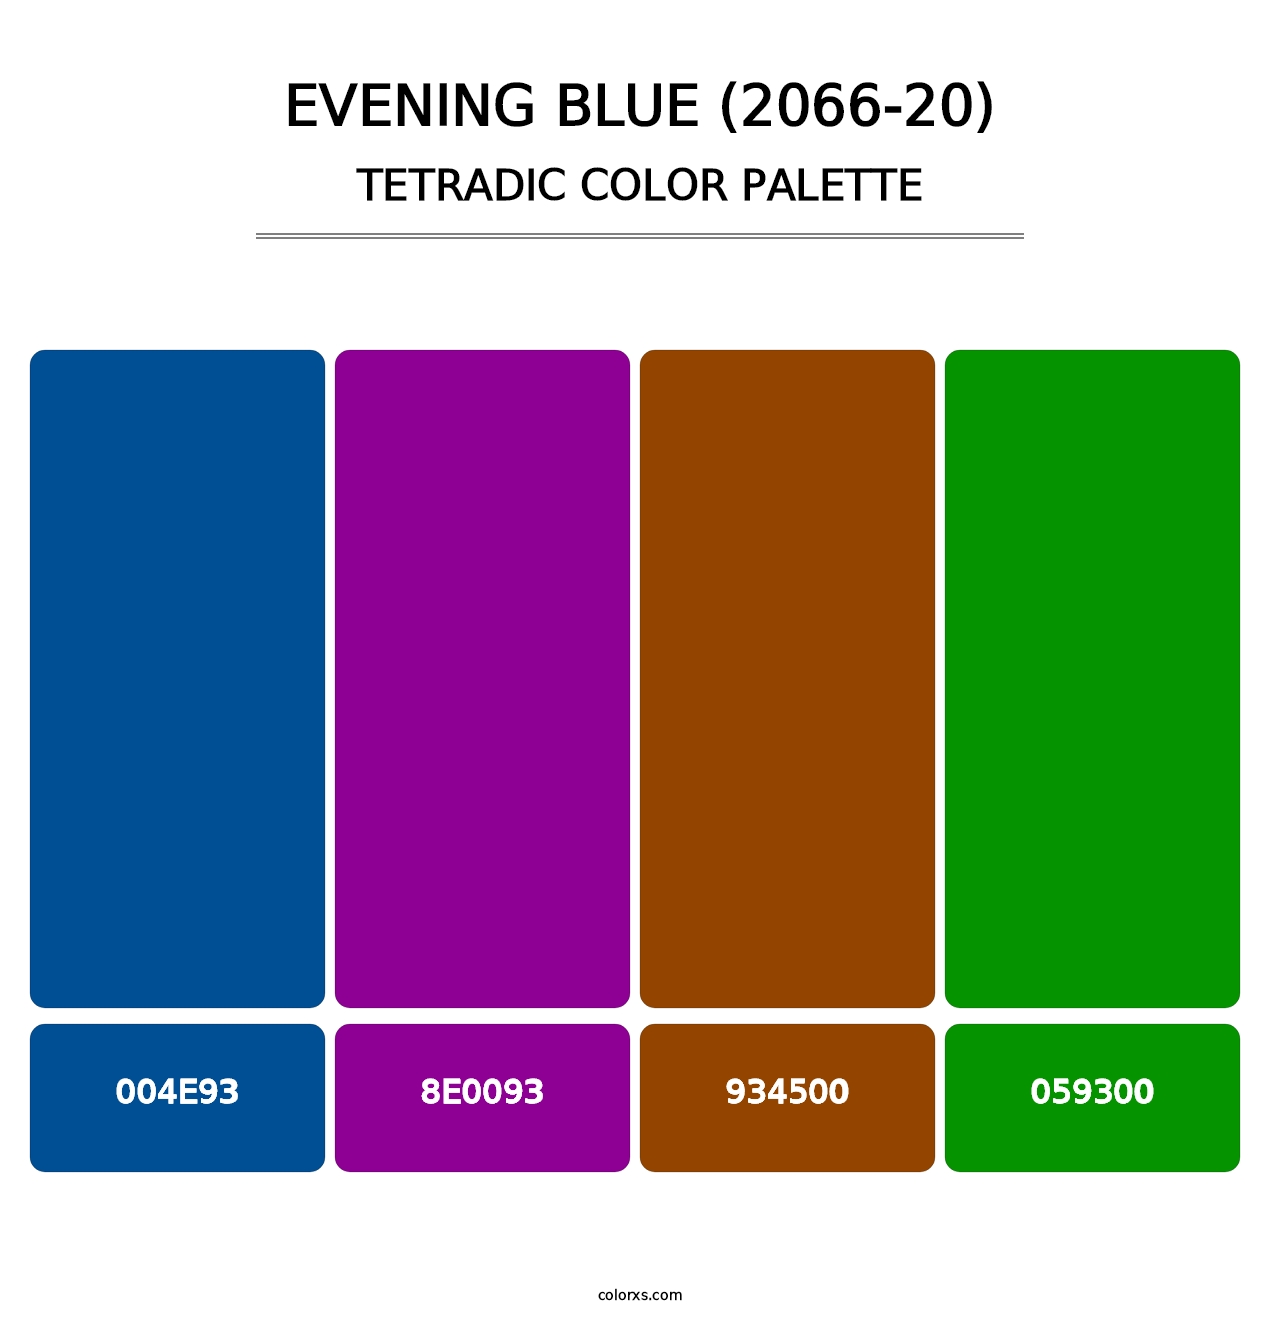 Evening Blue (2066-20) - Tetradic Color Palette